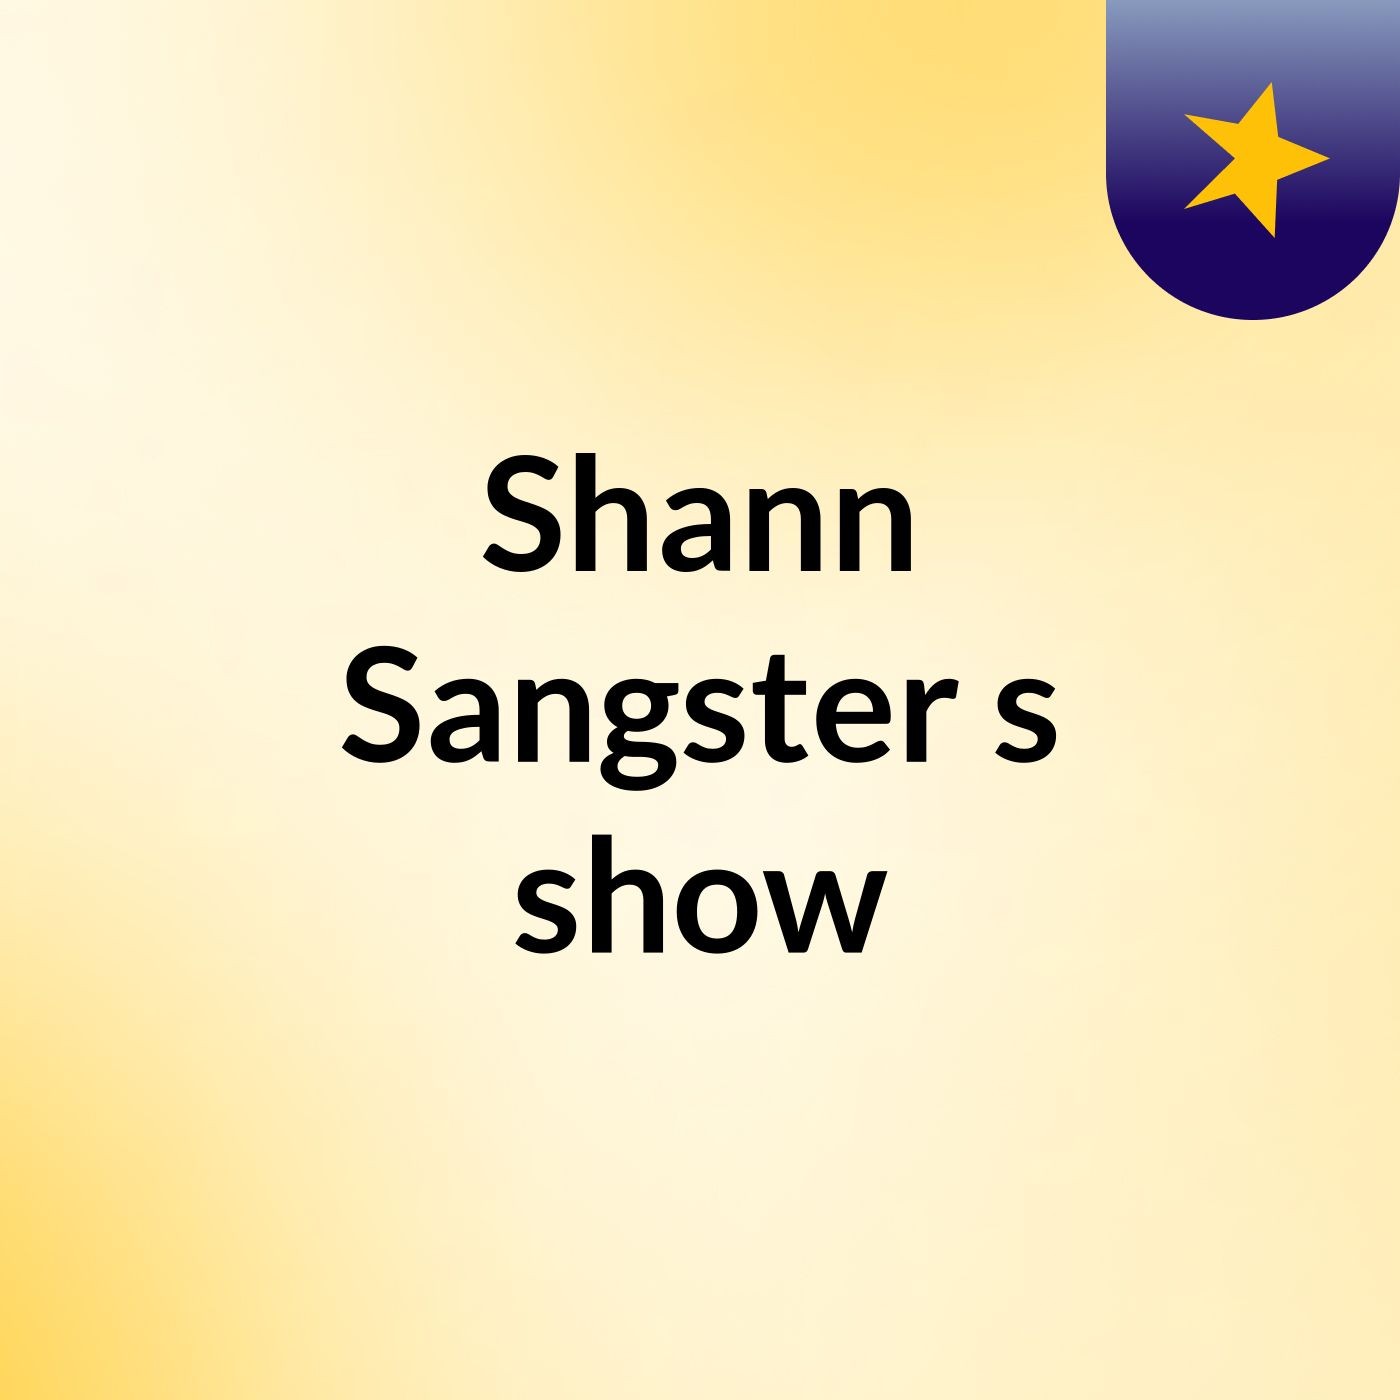 Episode 2 - Shann Sangster's show